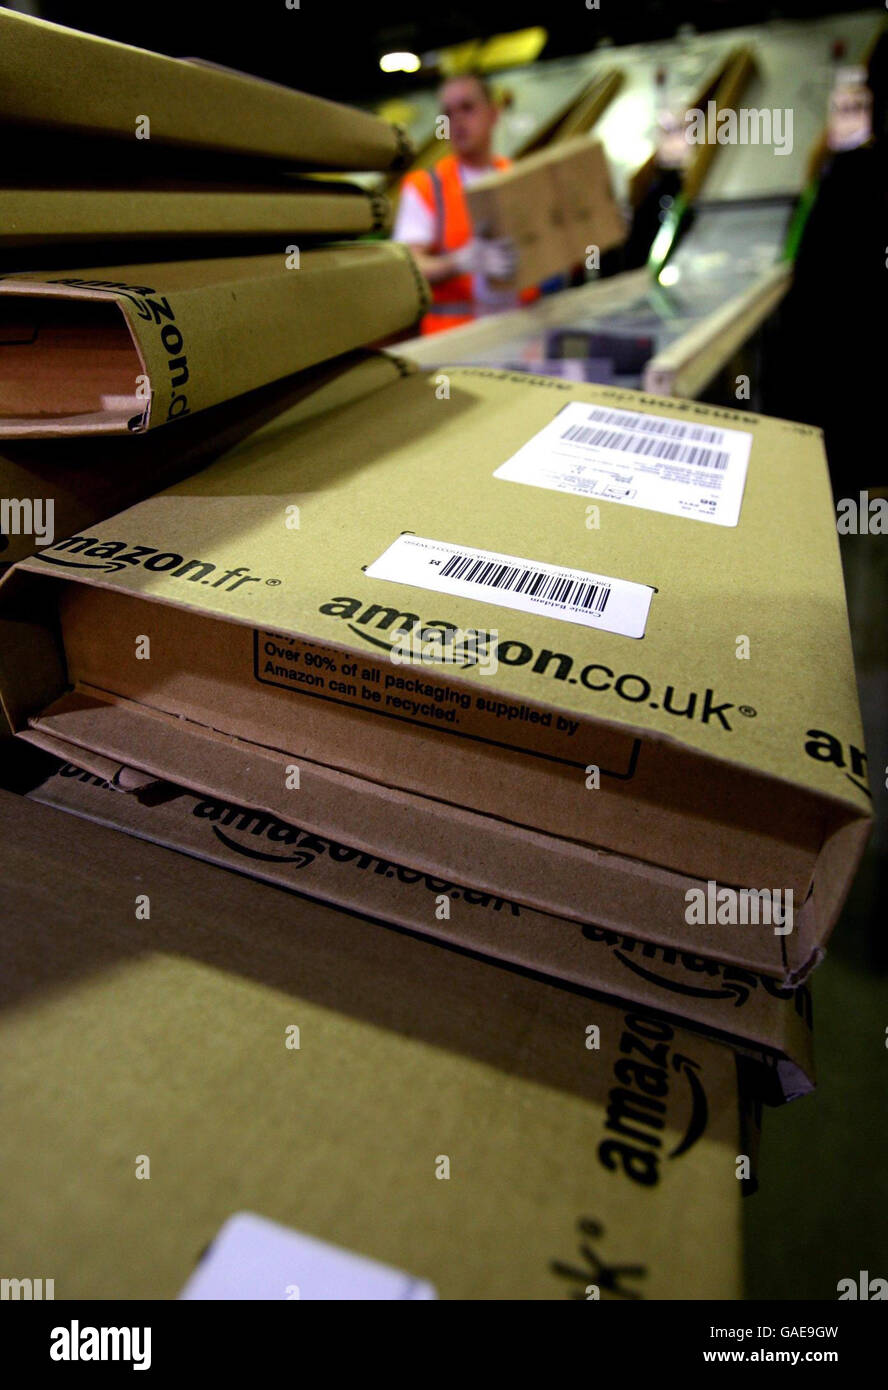 Amazon warehouse - Milton Keynes. Parcels ready for dispatch at the Amazon.co.uk distribution centre near Milton Keynes. Stock Photo